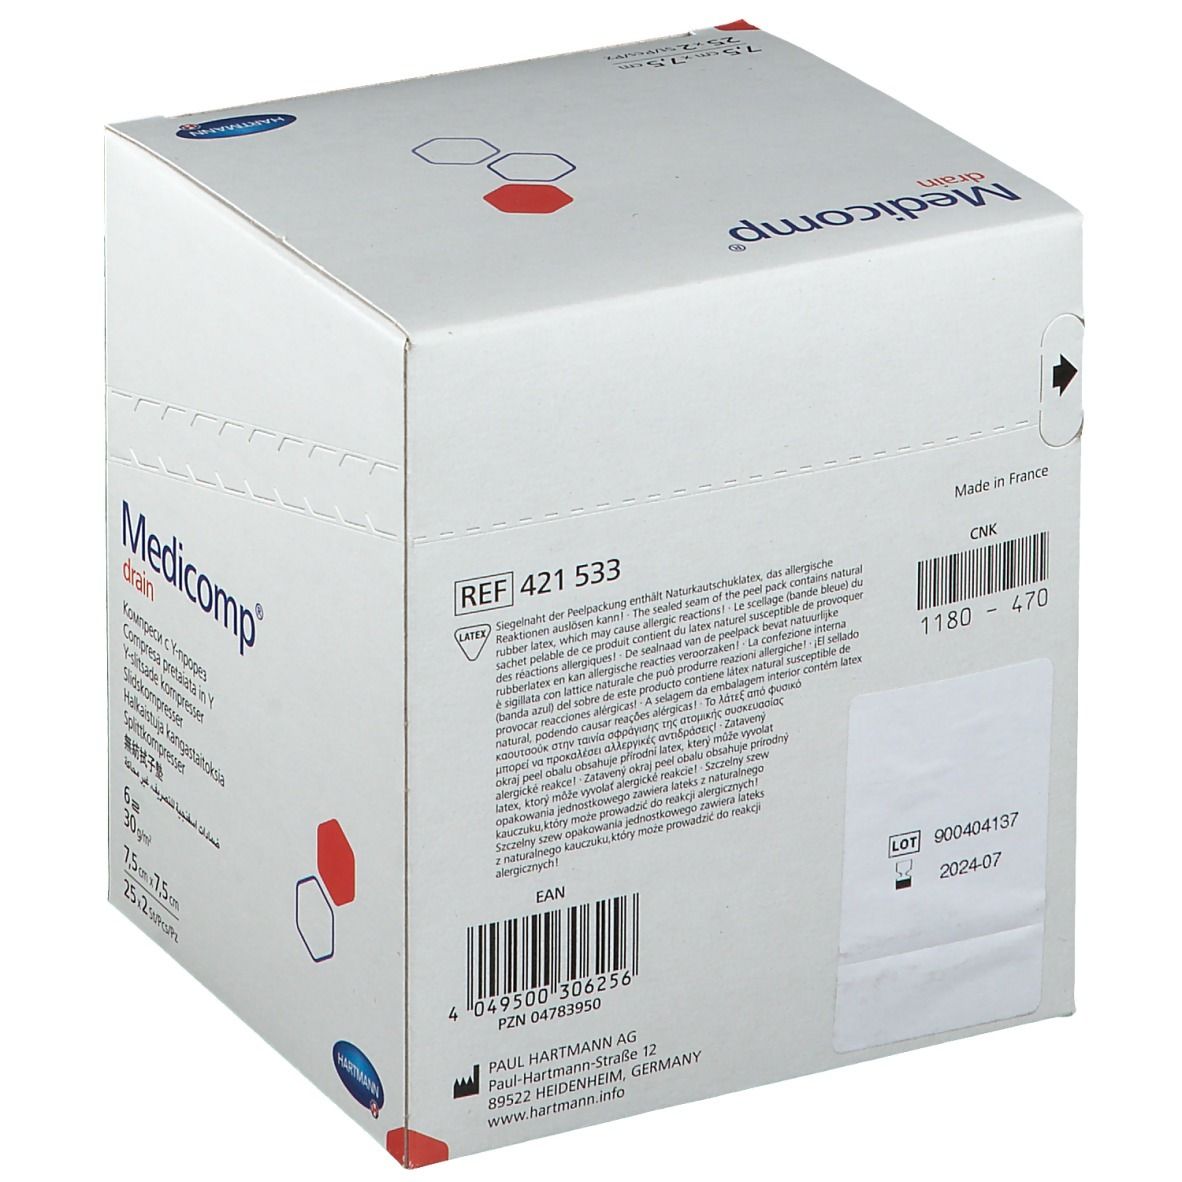 Medicomp® drain 7,5 x 7,5 cm steril